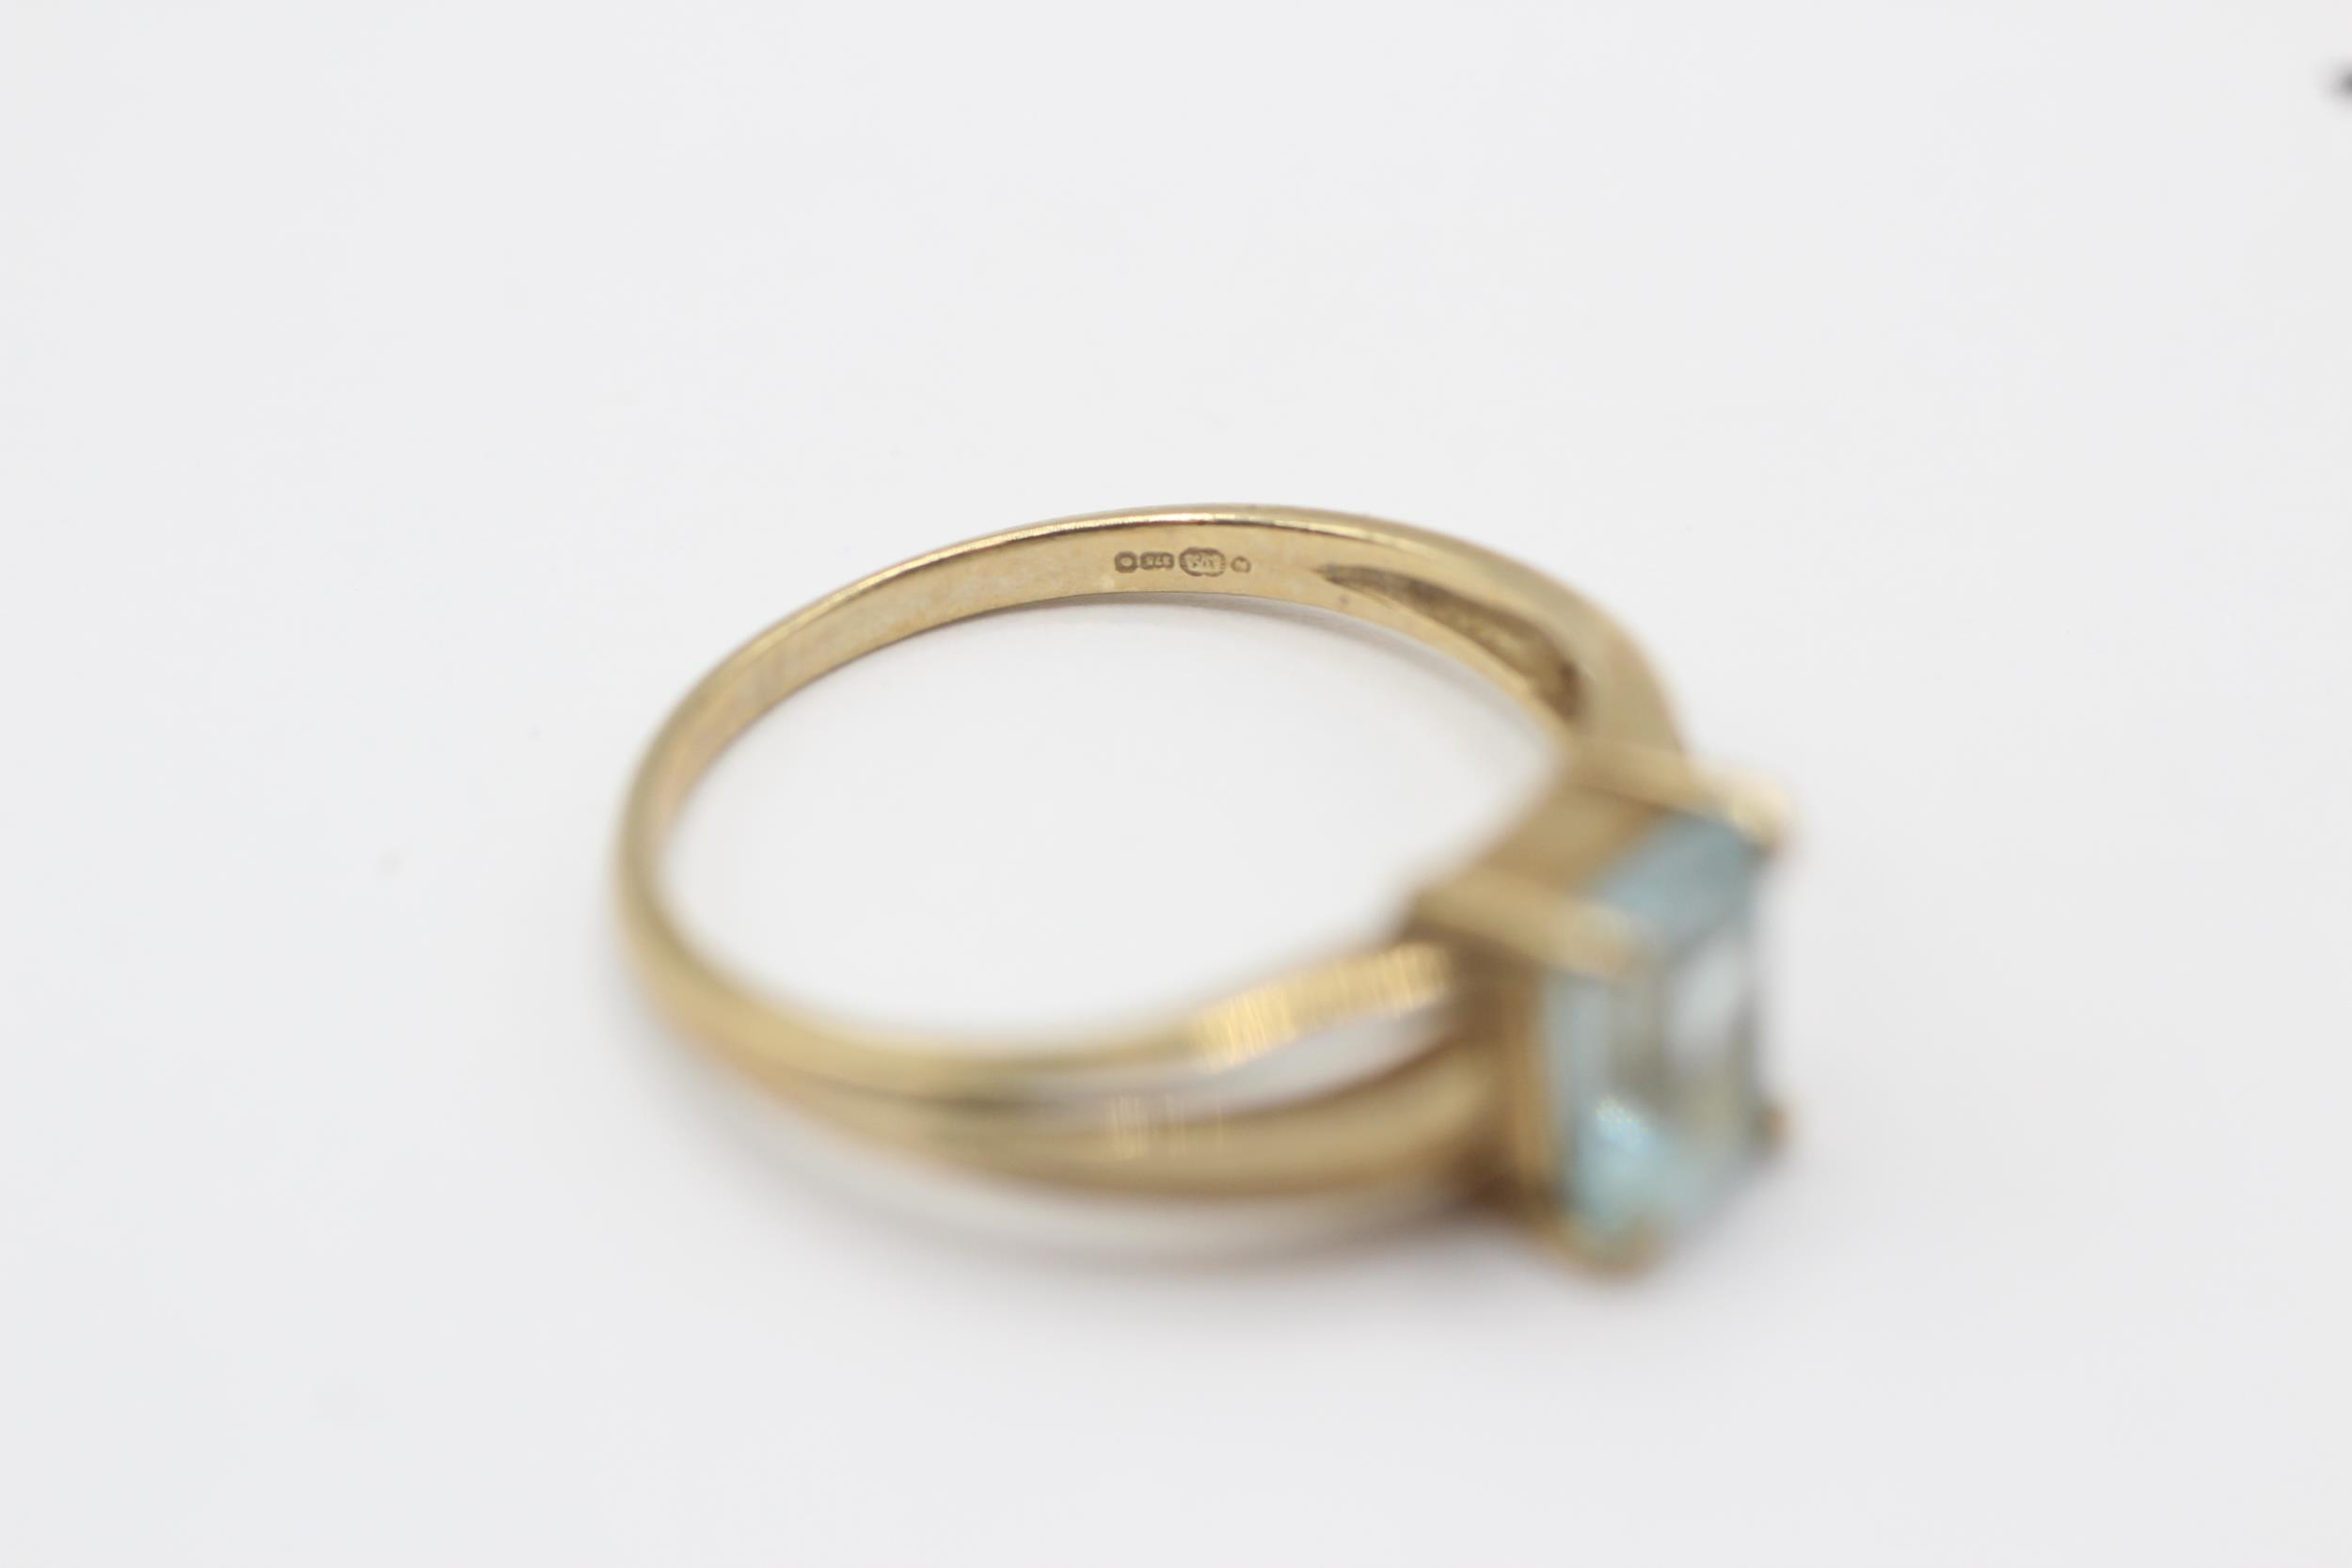 9ct gold rectangle topaz single stone ring Size M 1.8 g - Image 6 of 6